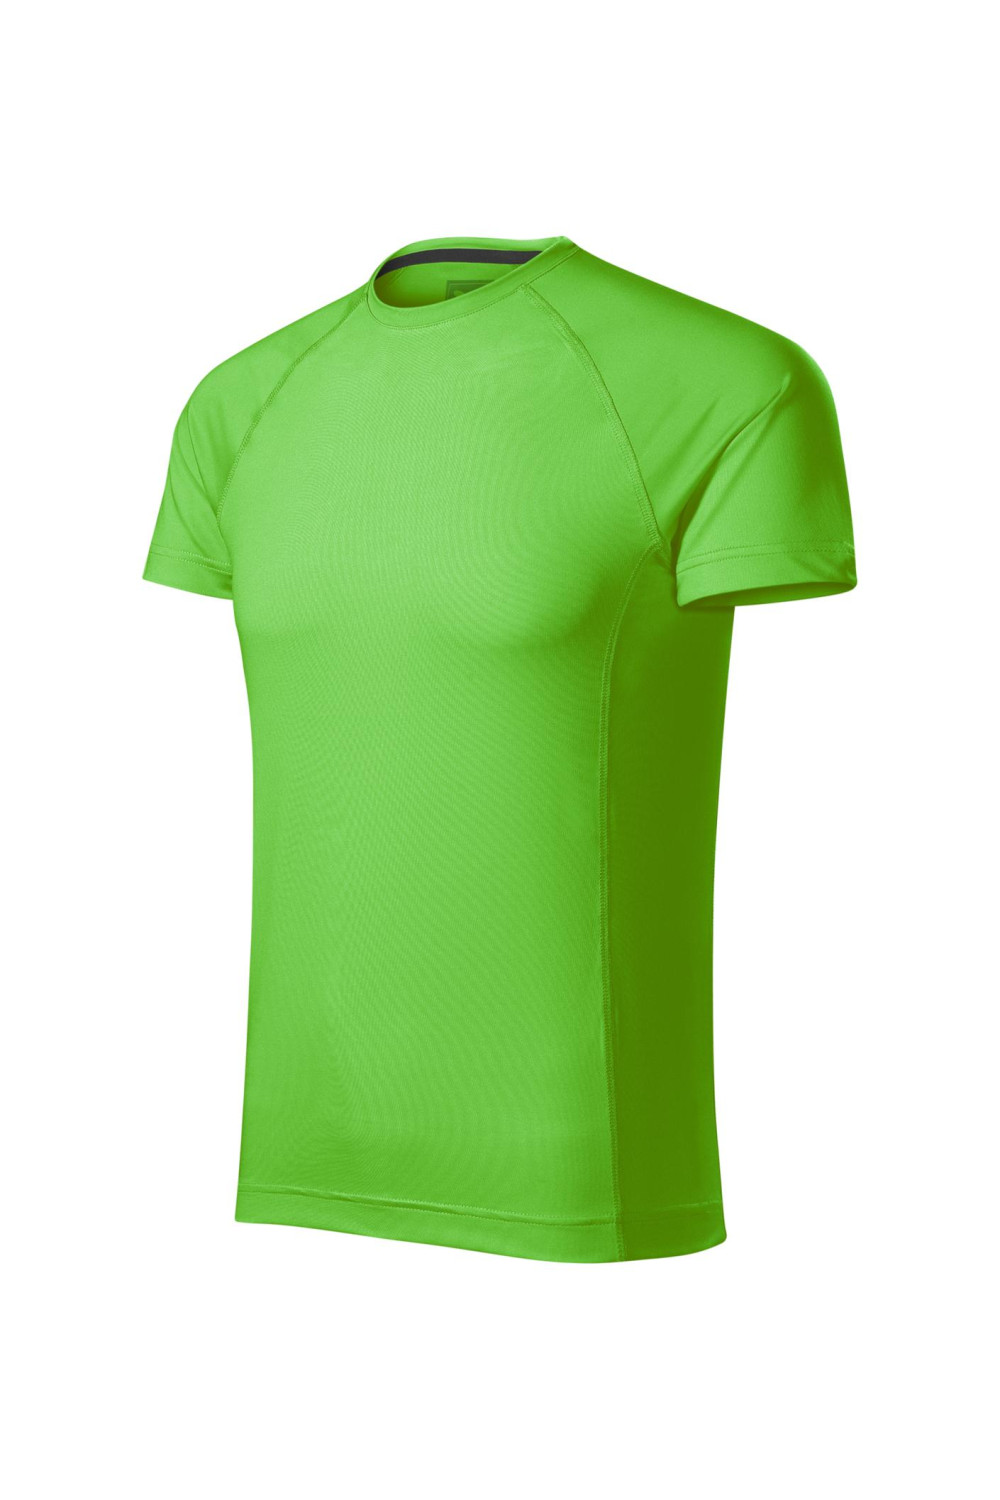 DESTINY 175 MALFINI ADLER Sportowa koszulka męska t-shirt green apple